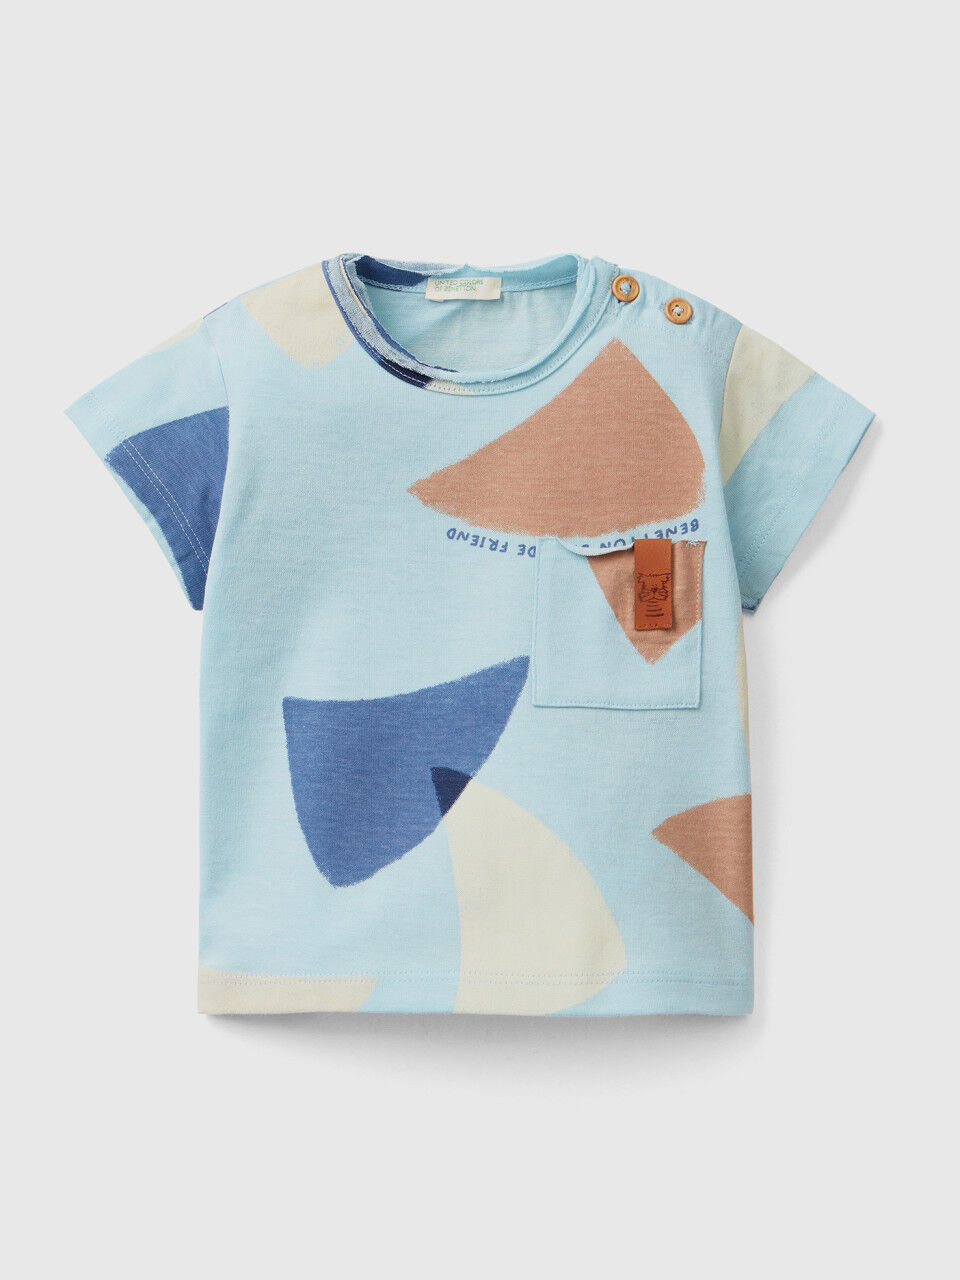 T-shirt with sail print